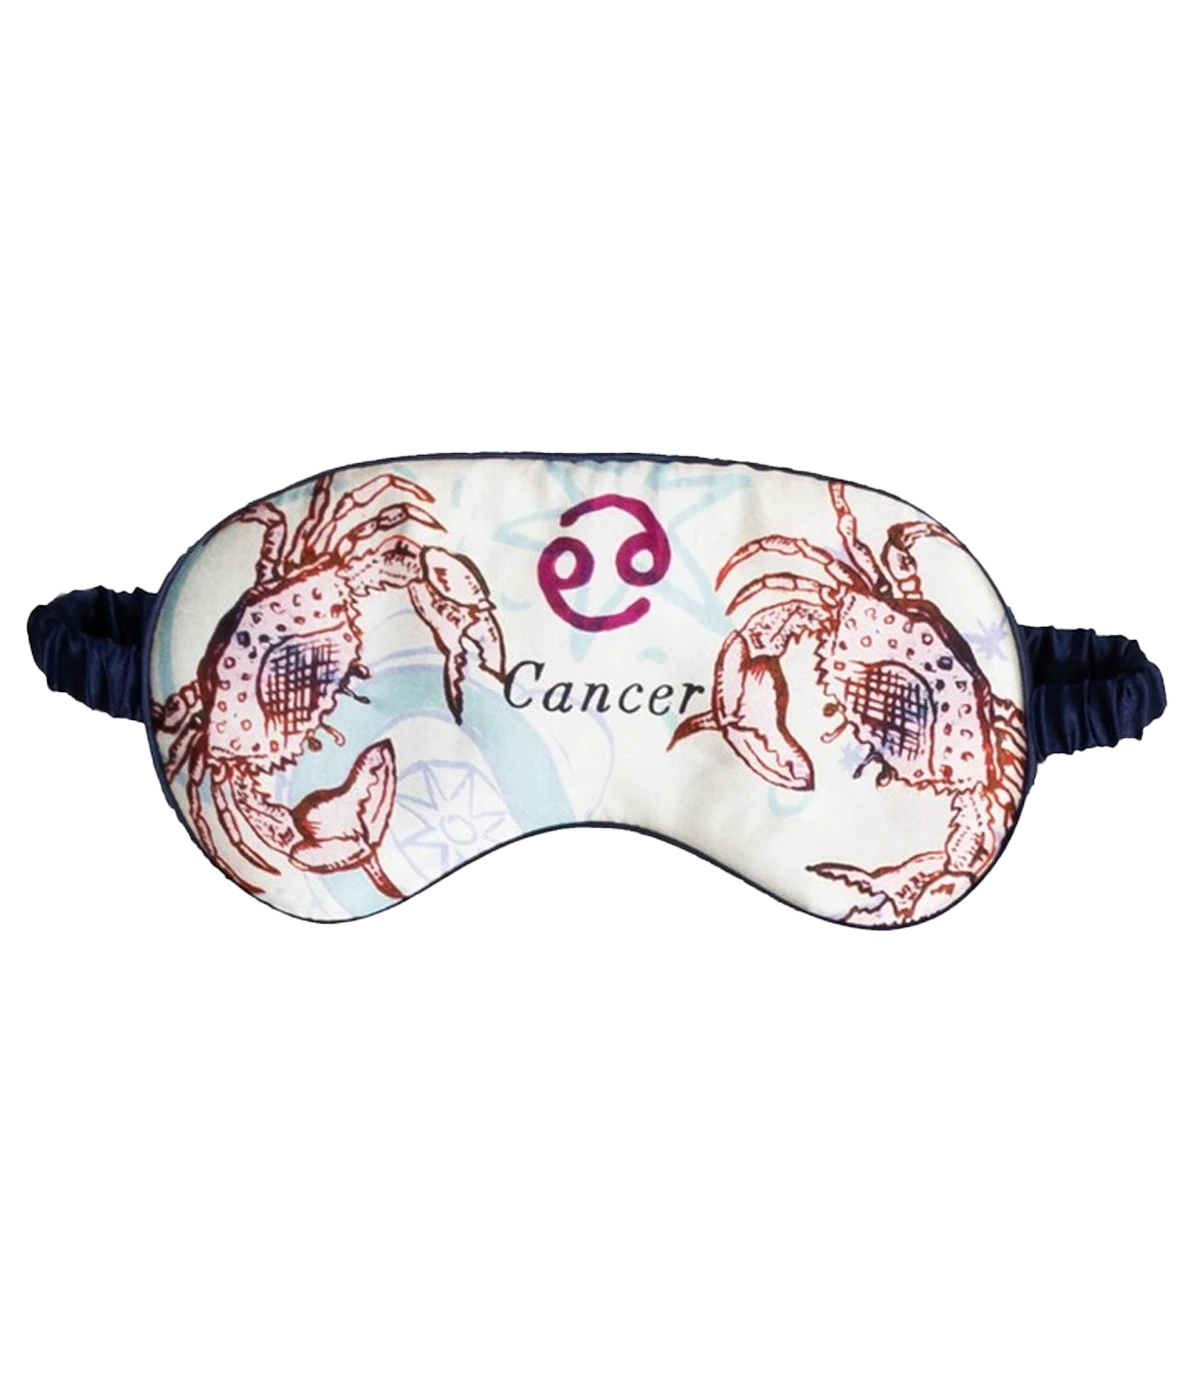 Zodiac Silk Eye Mask in Cancer